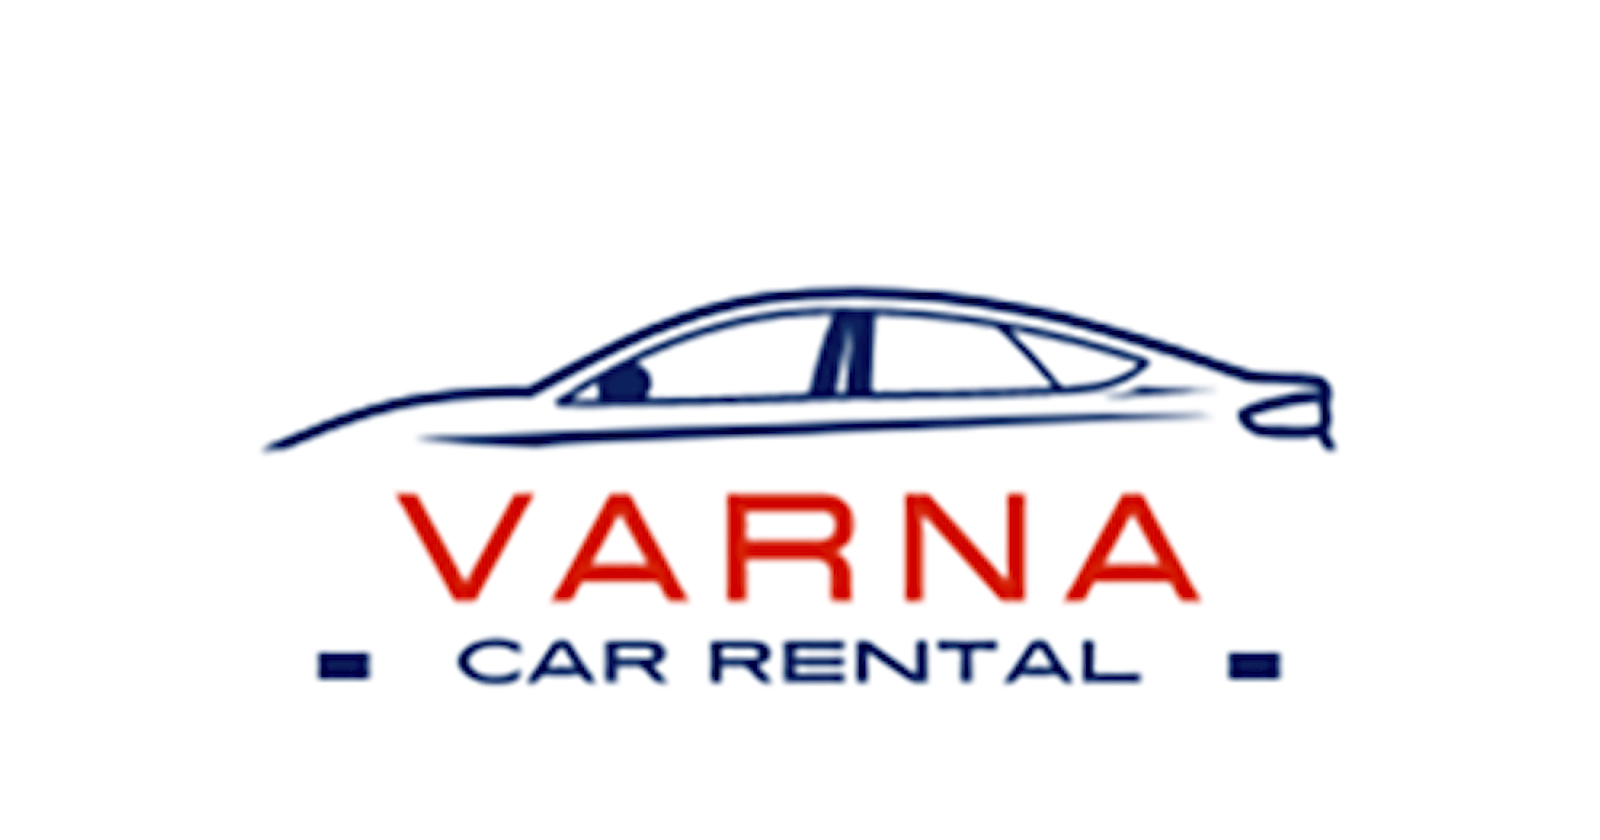 Reasons to Opt for Car Rental in Varna